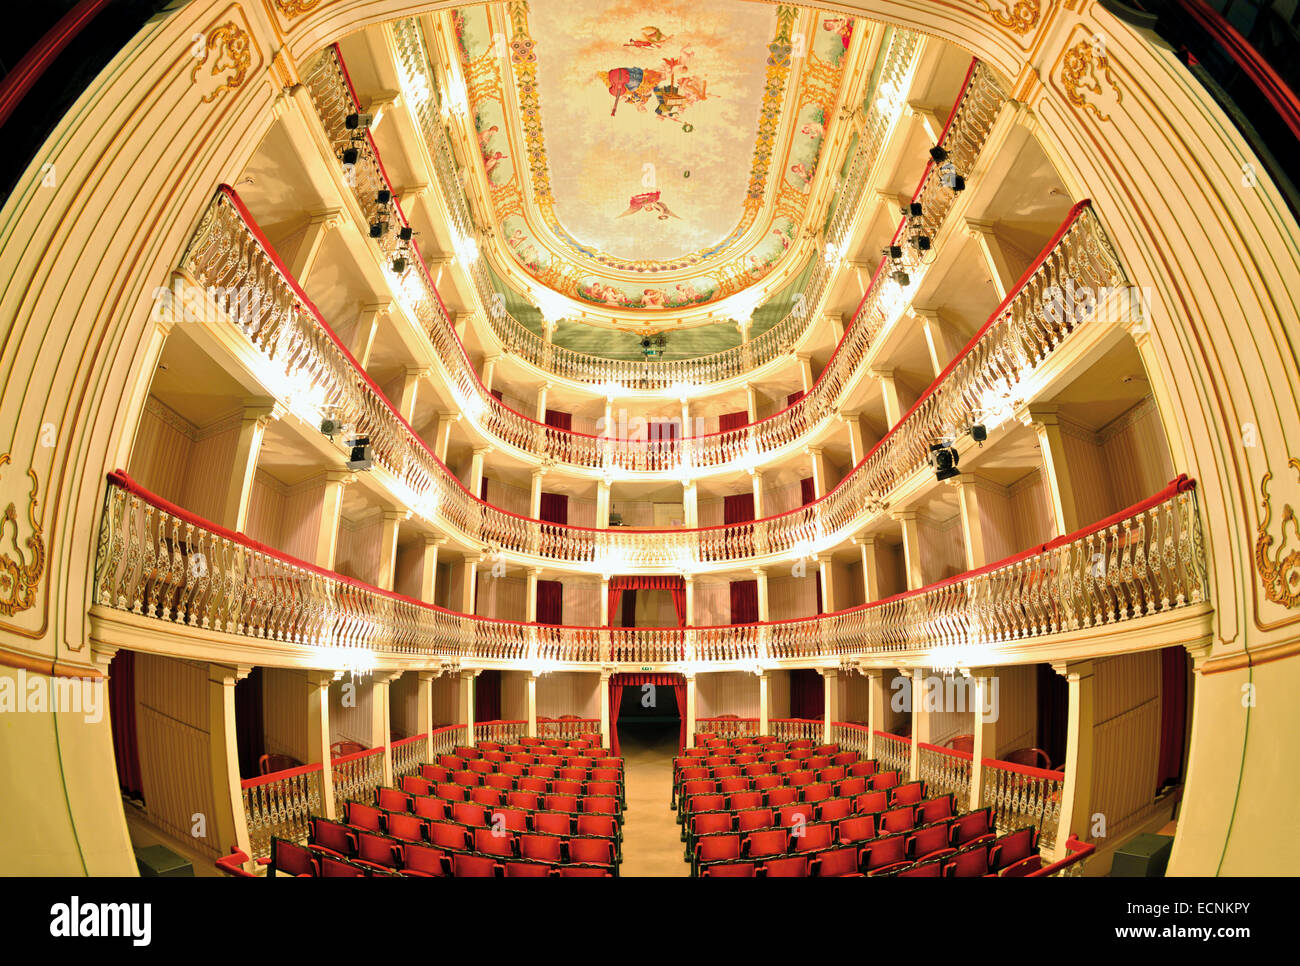 Portugal, Algarve: Auditorium of the historic theater Teatro Lethes in Faro Stock Photo